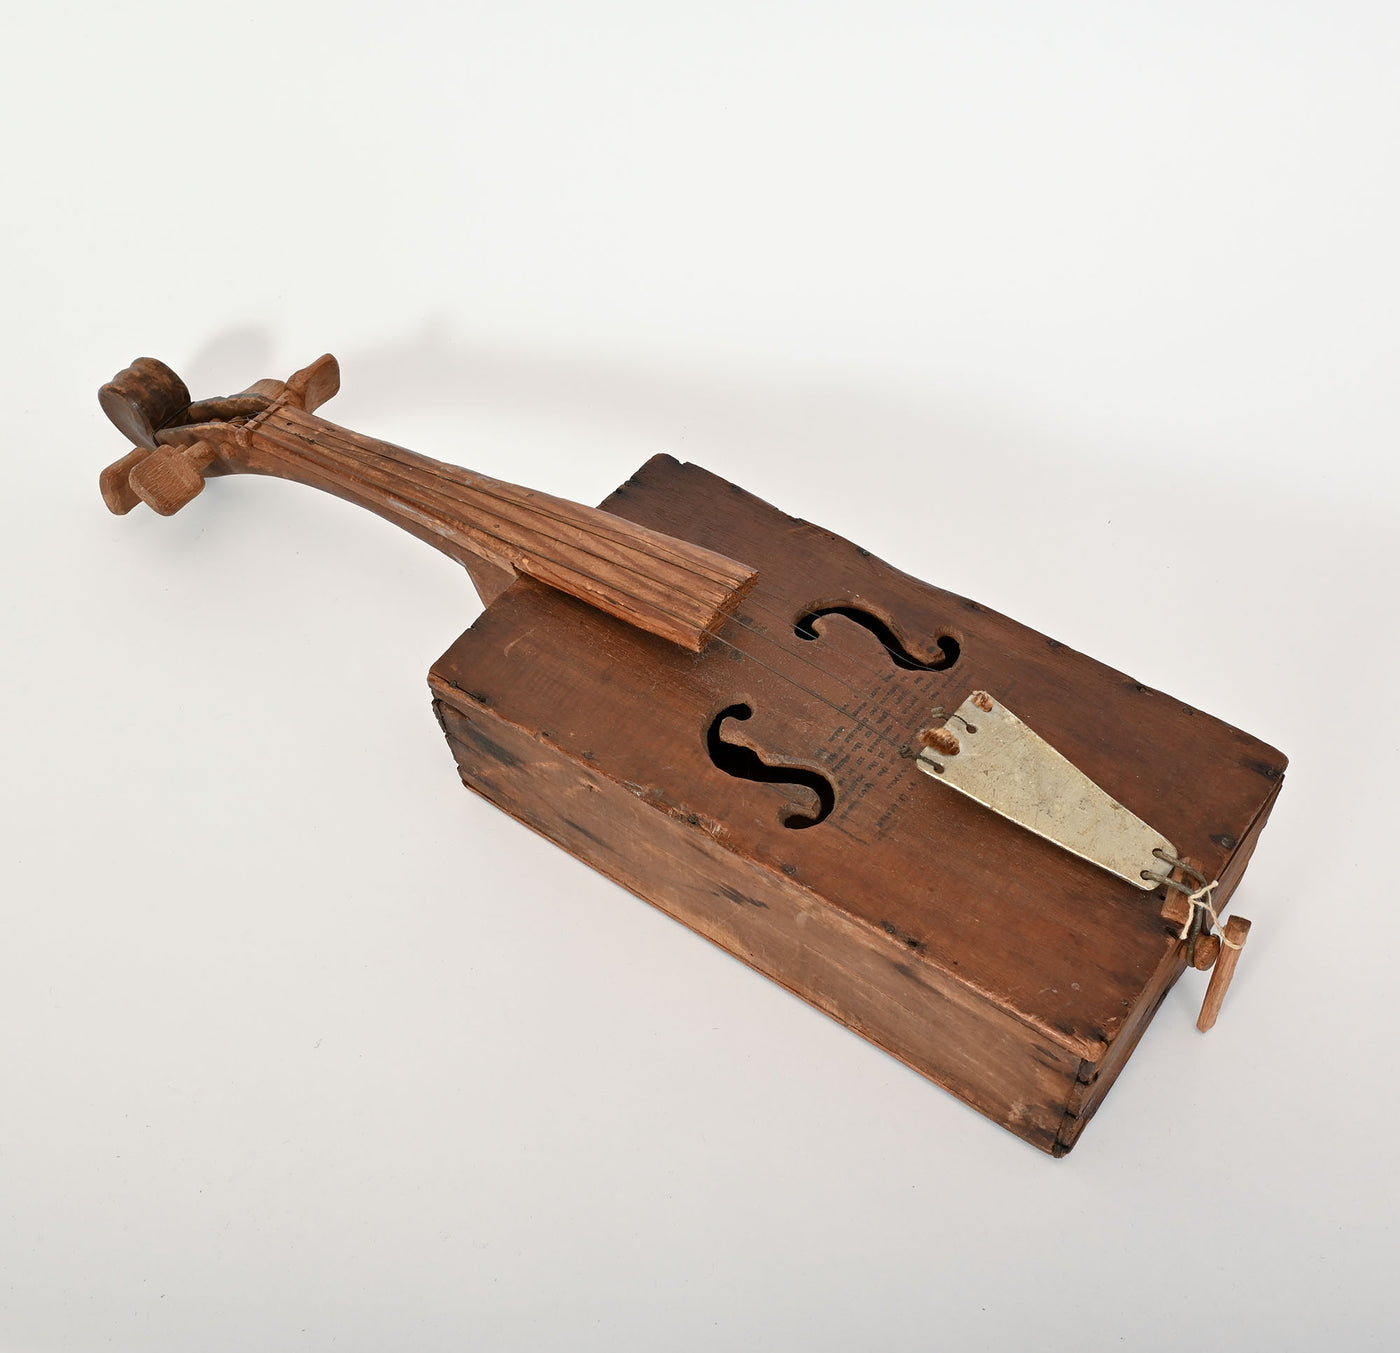 Three Homemade Wood Instruments